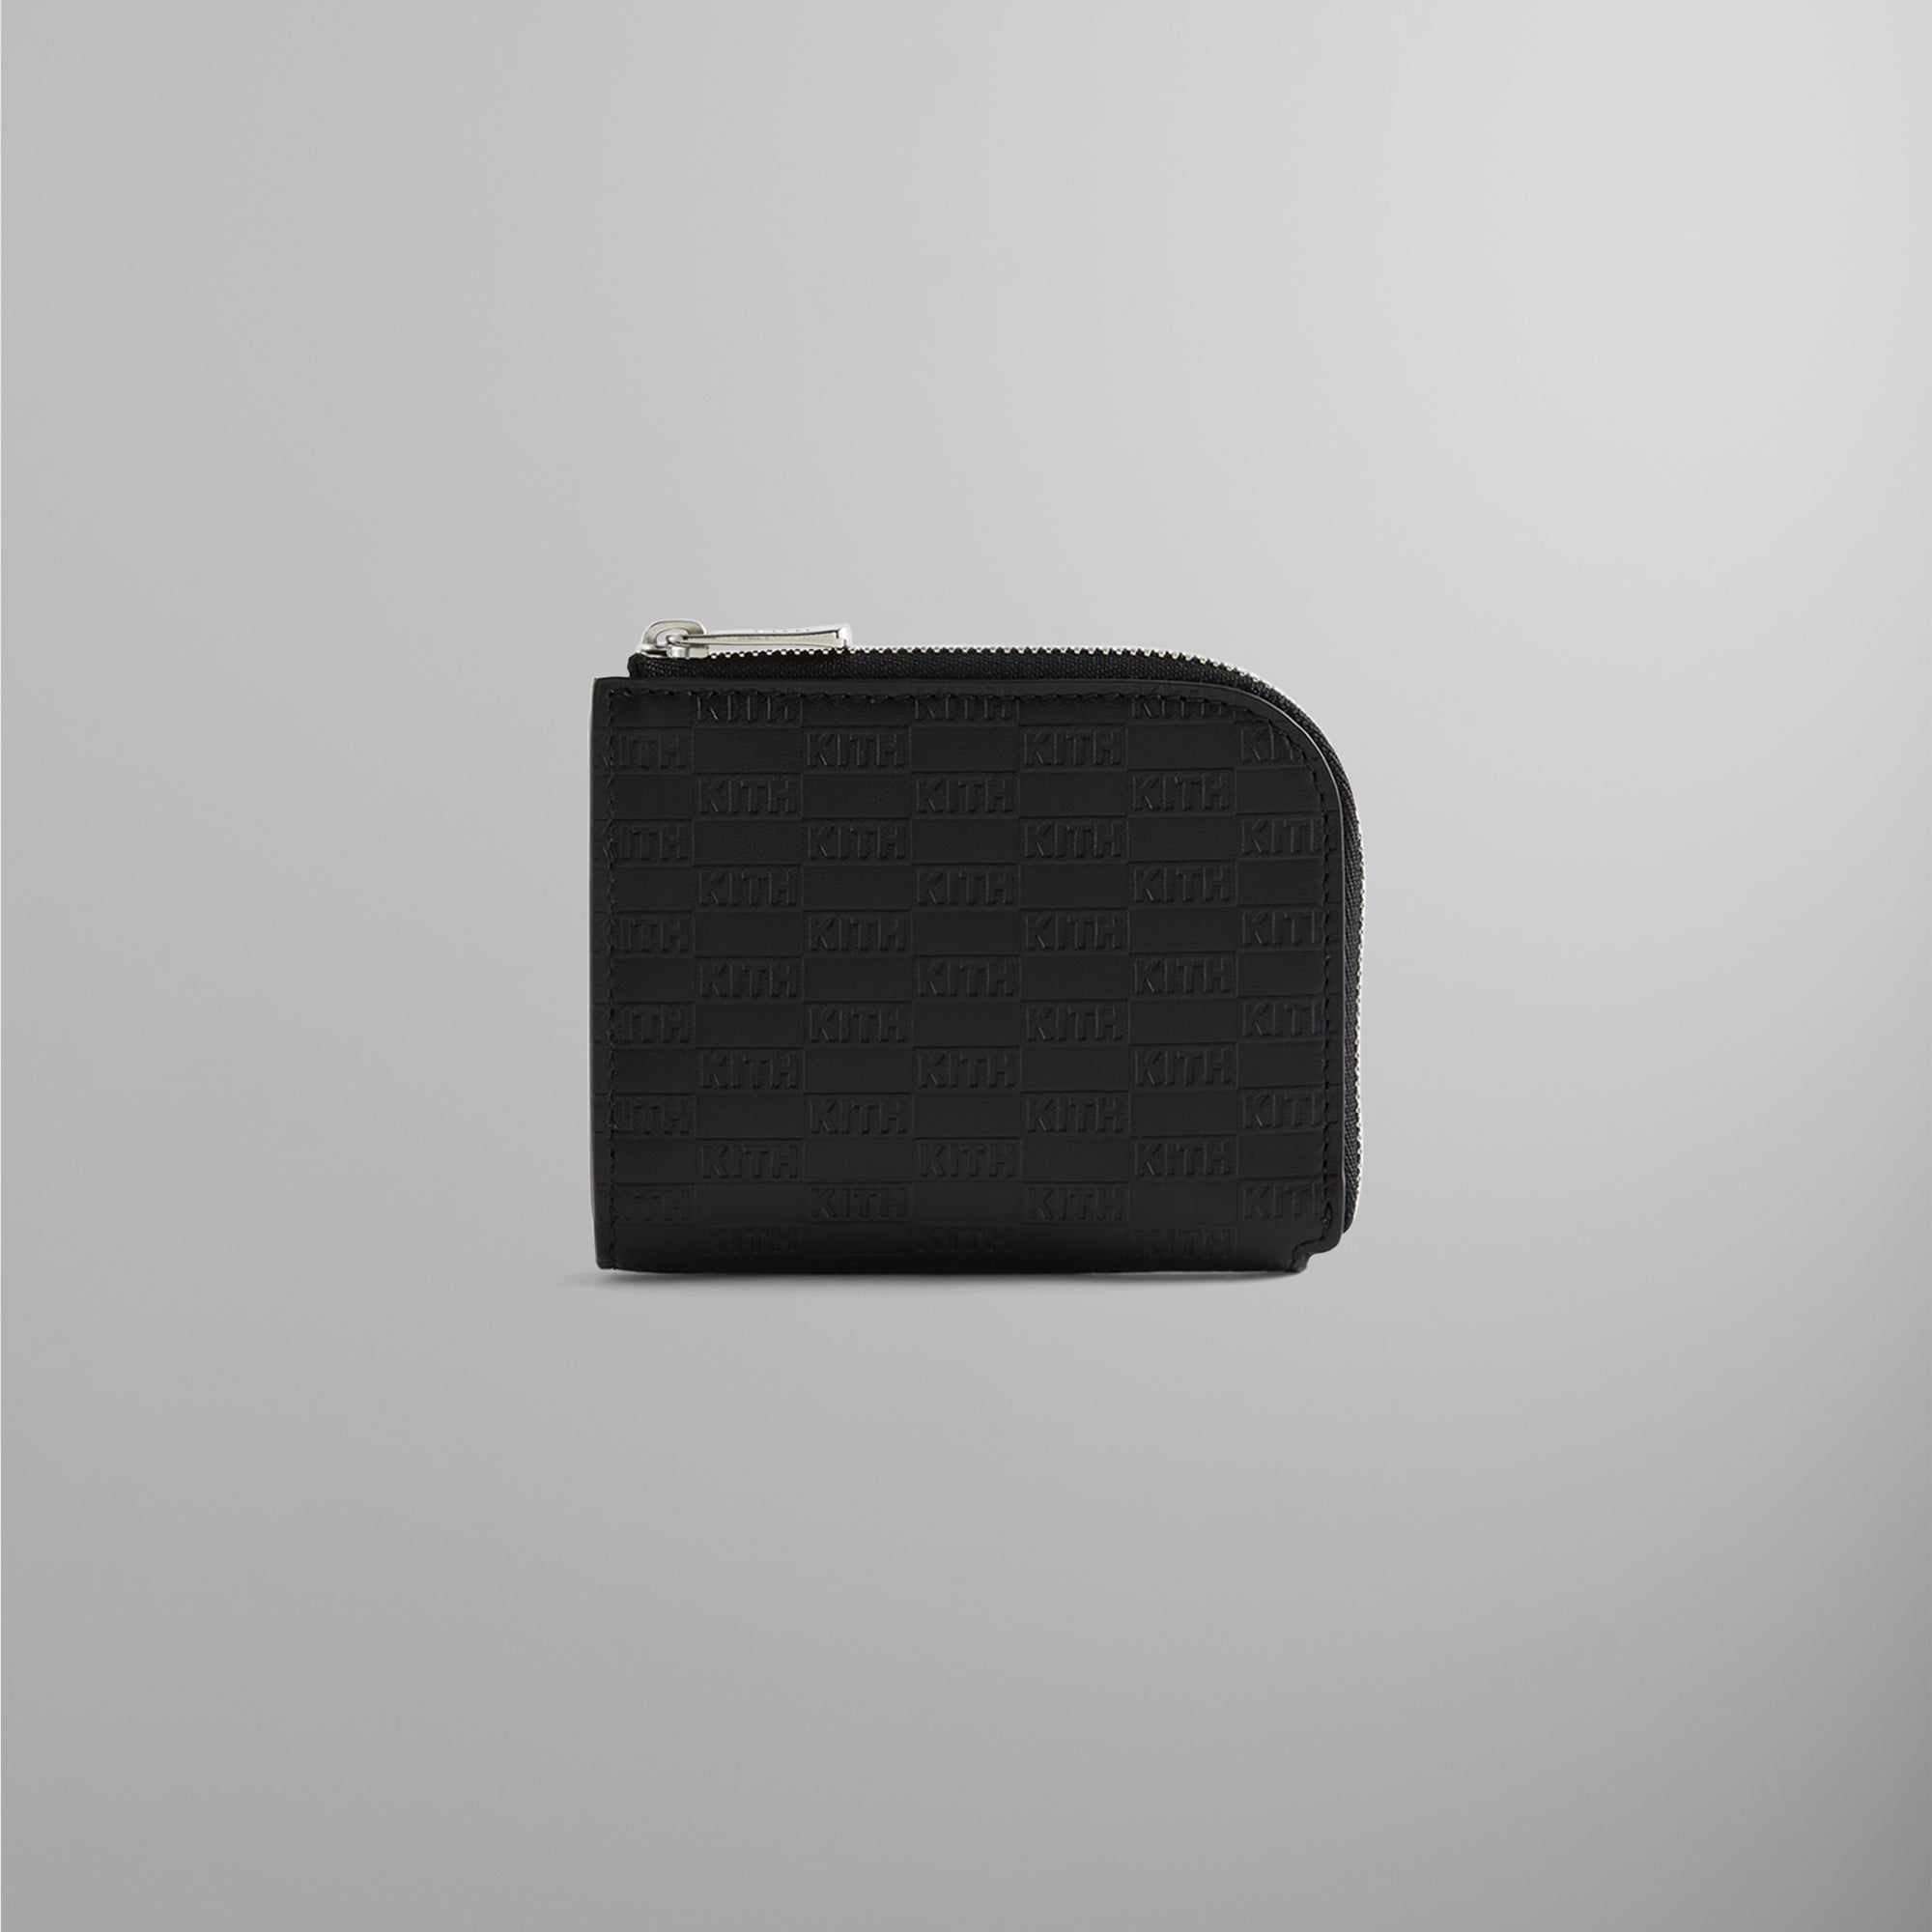 Kithmas Monogram Half Zip Wallet - Black